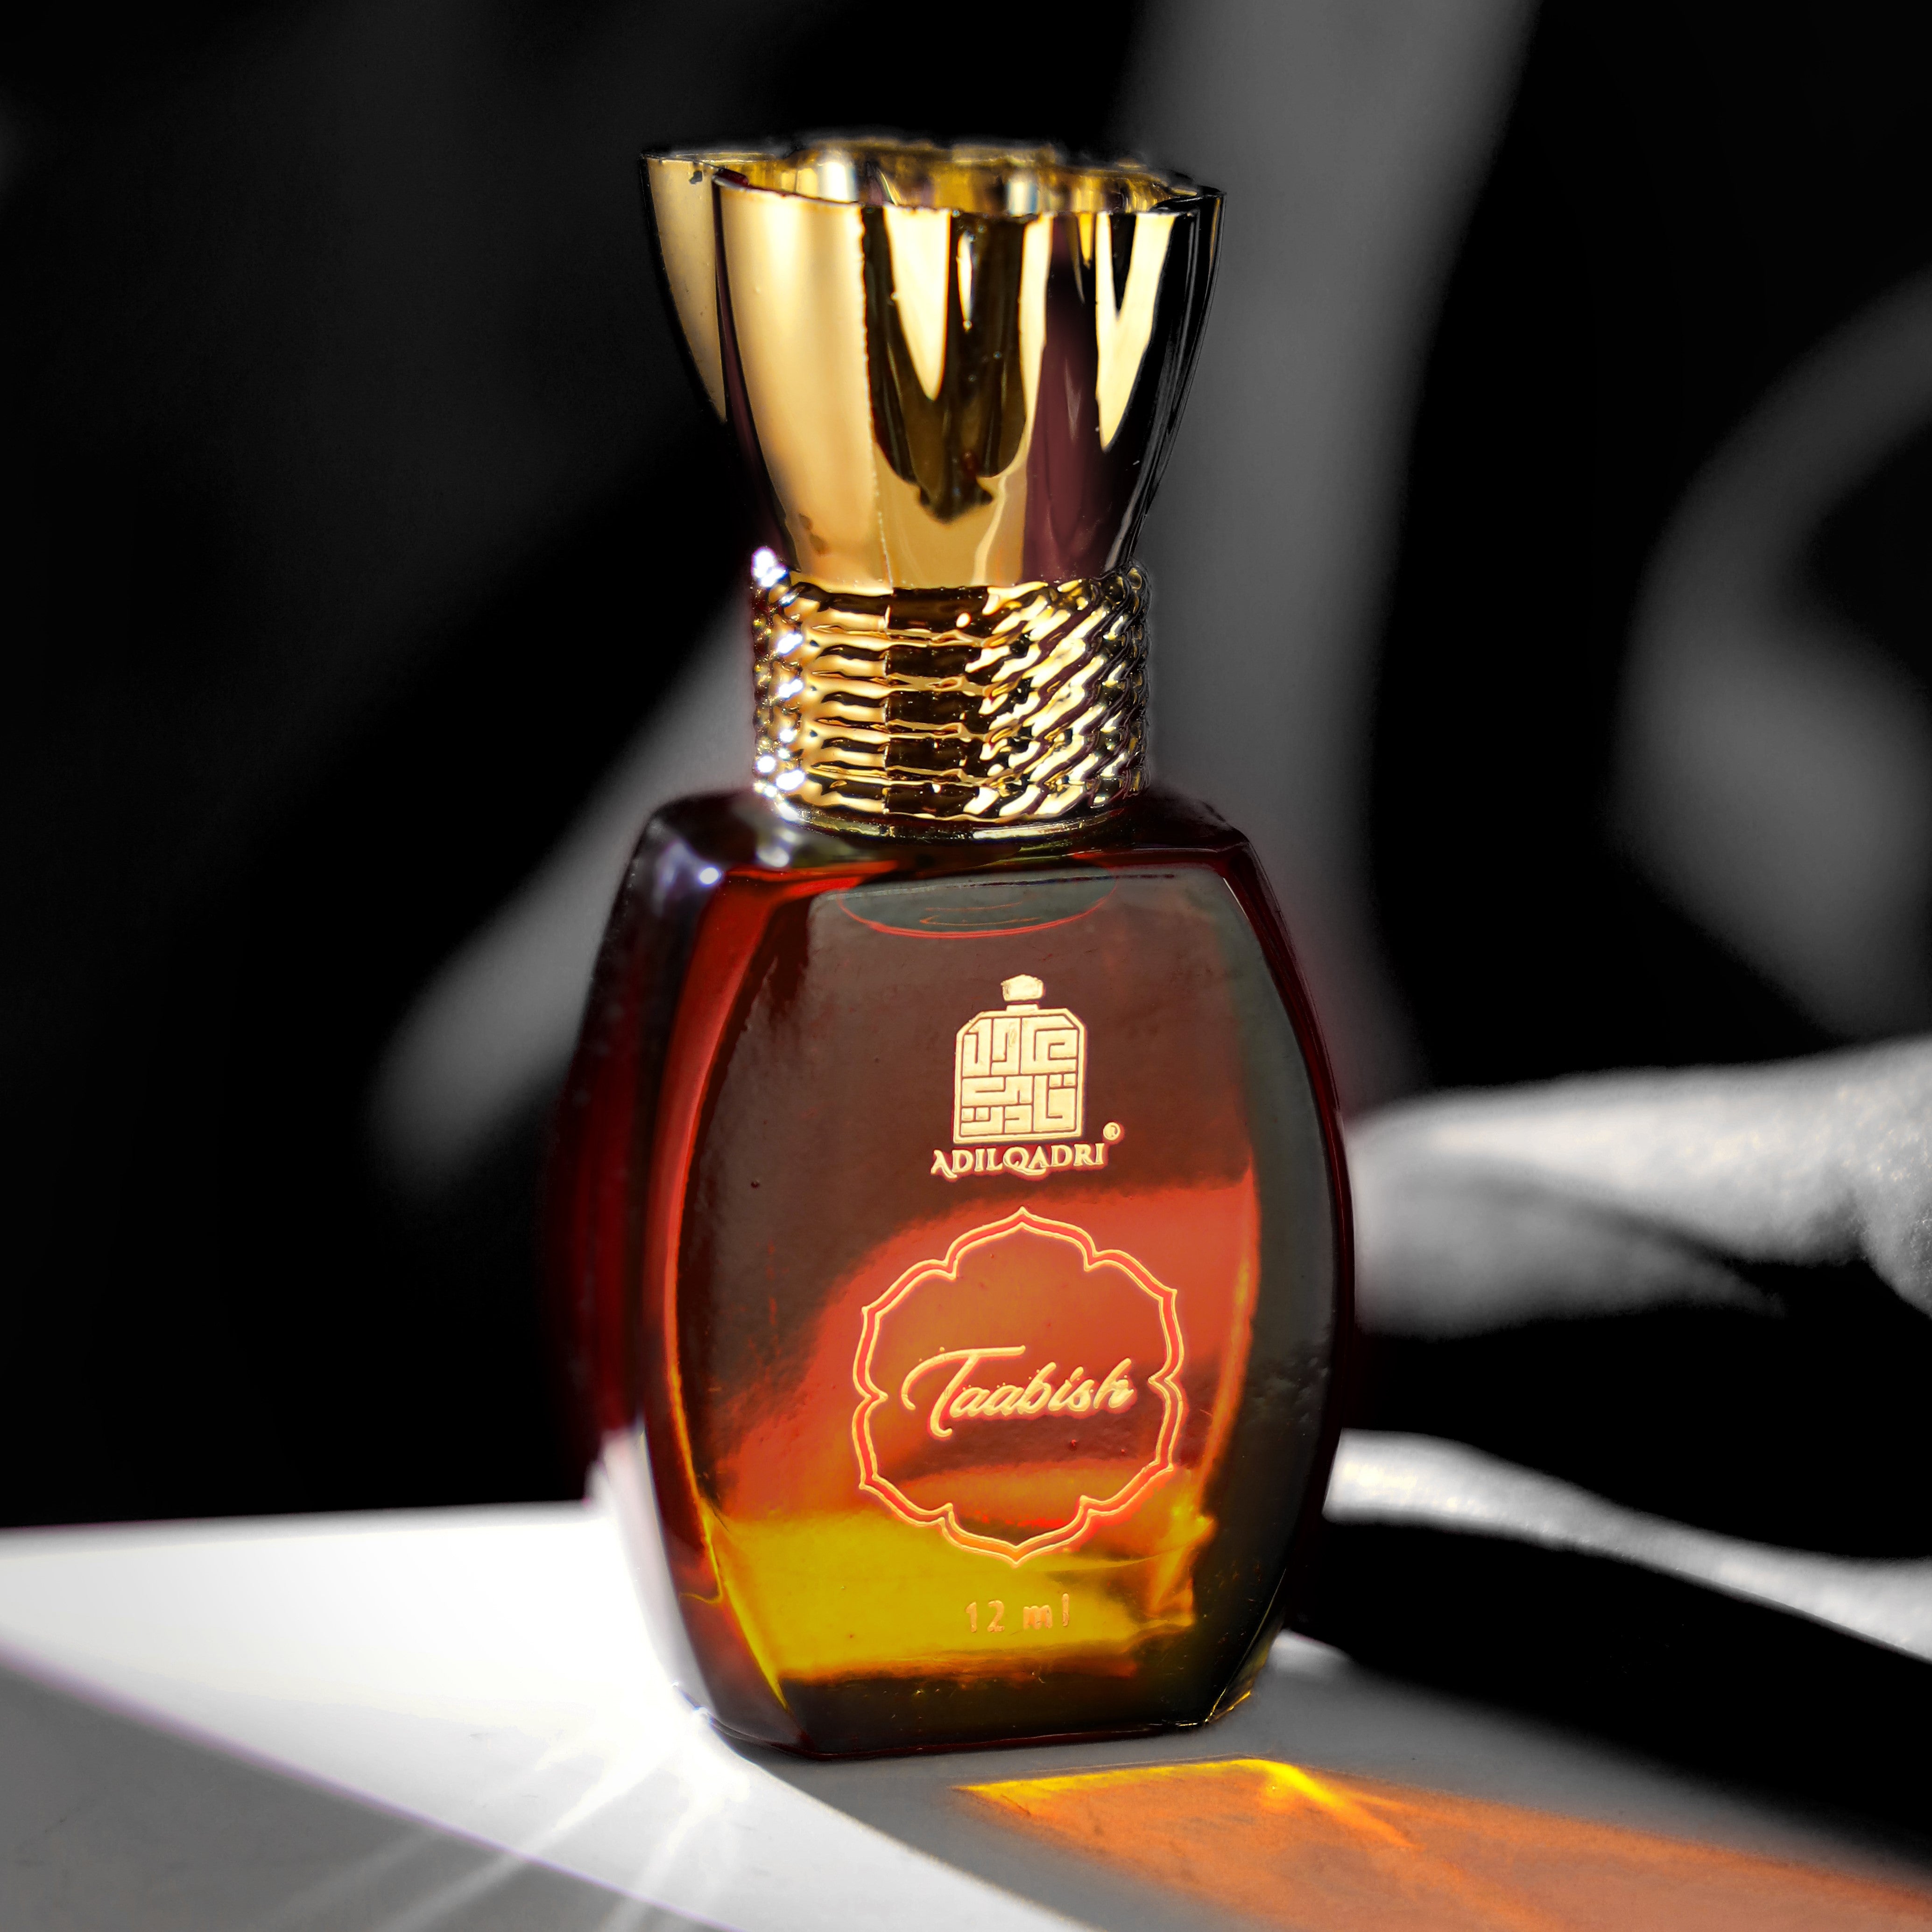 Taabish Luxury Attar Perfume